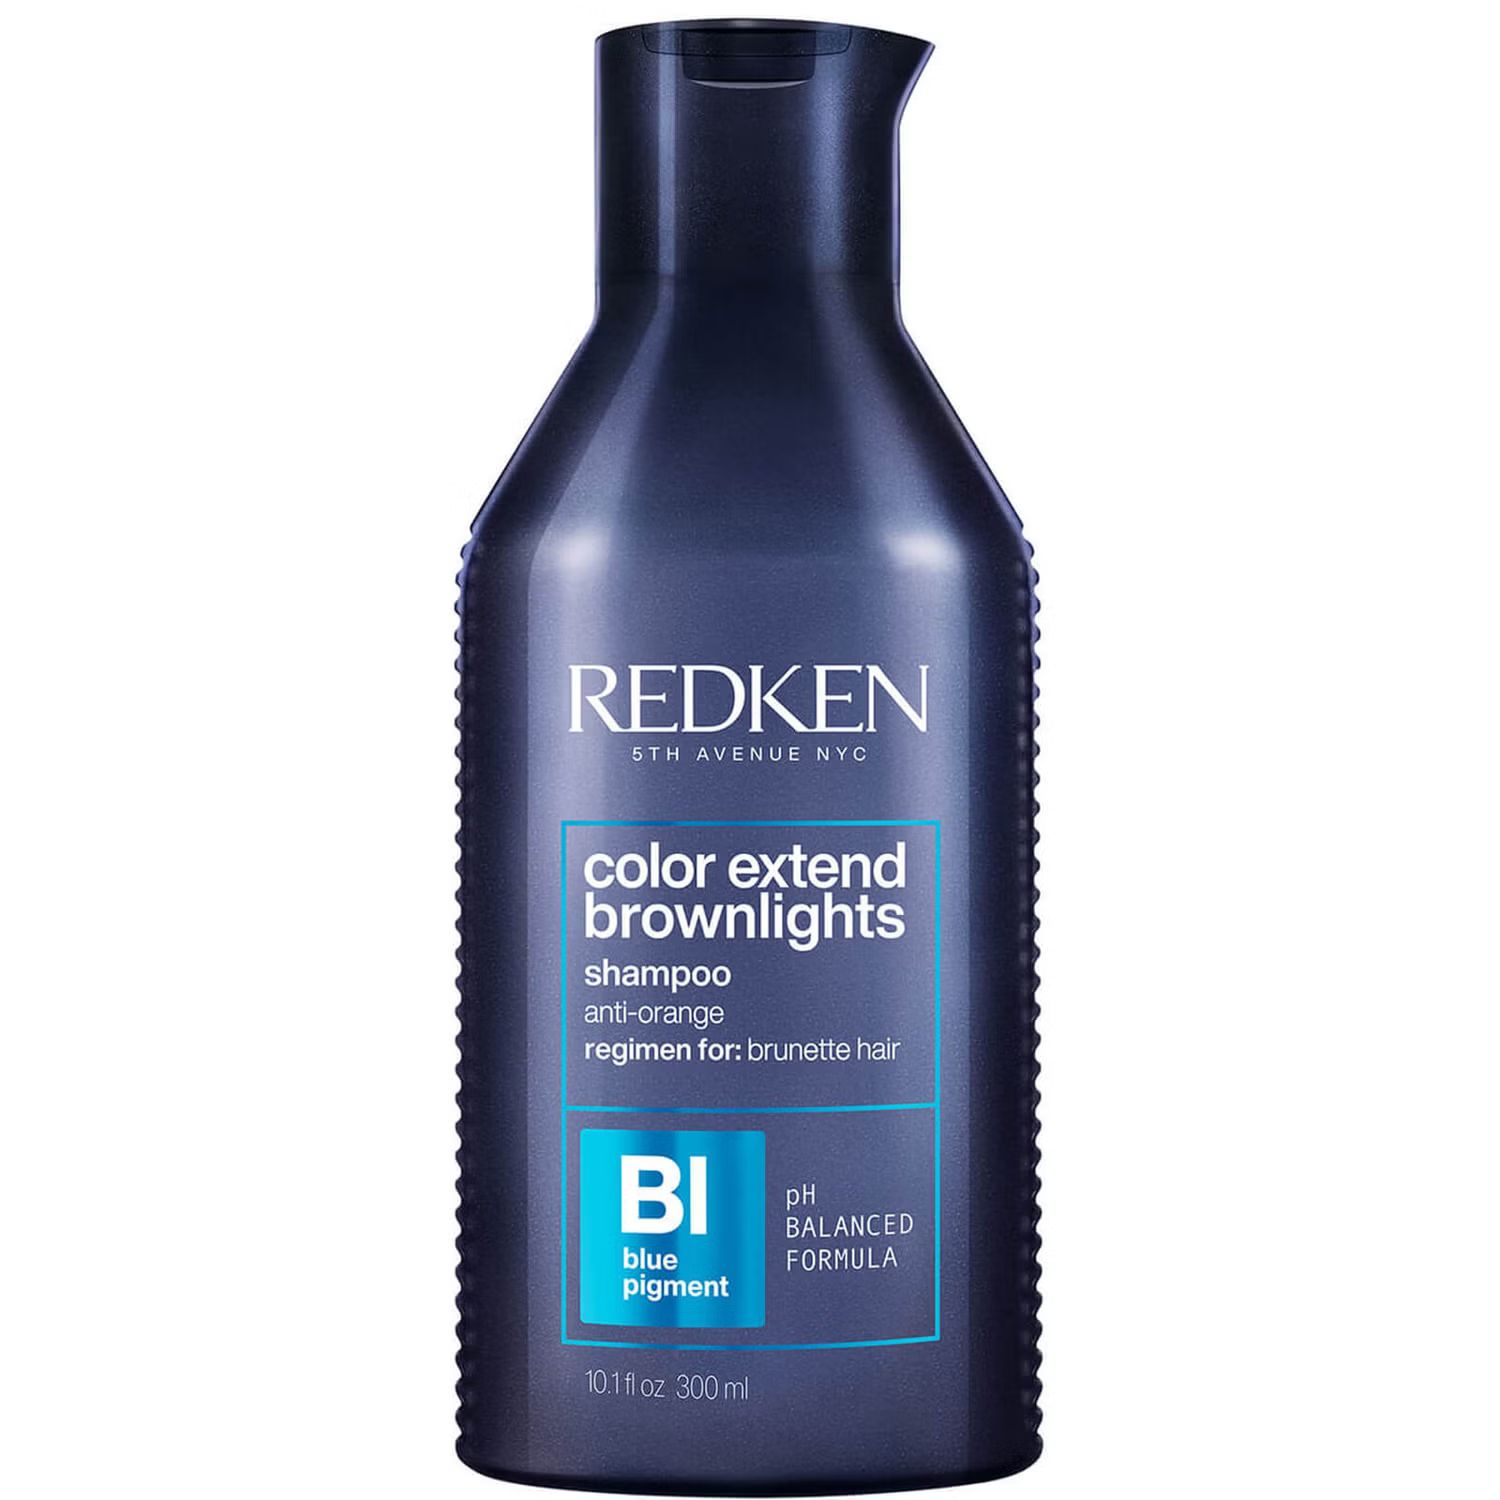 Redken Color Extend Brownlights Shampoo 300ml | Look Fantastic (UK)